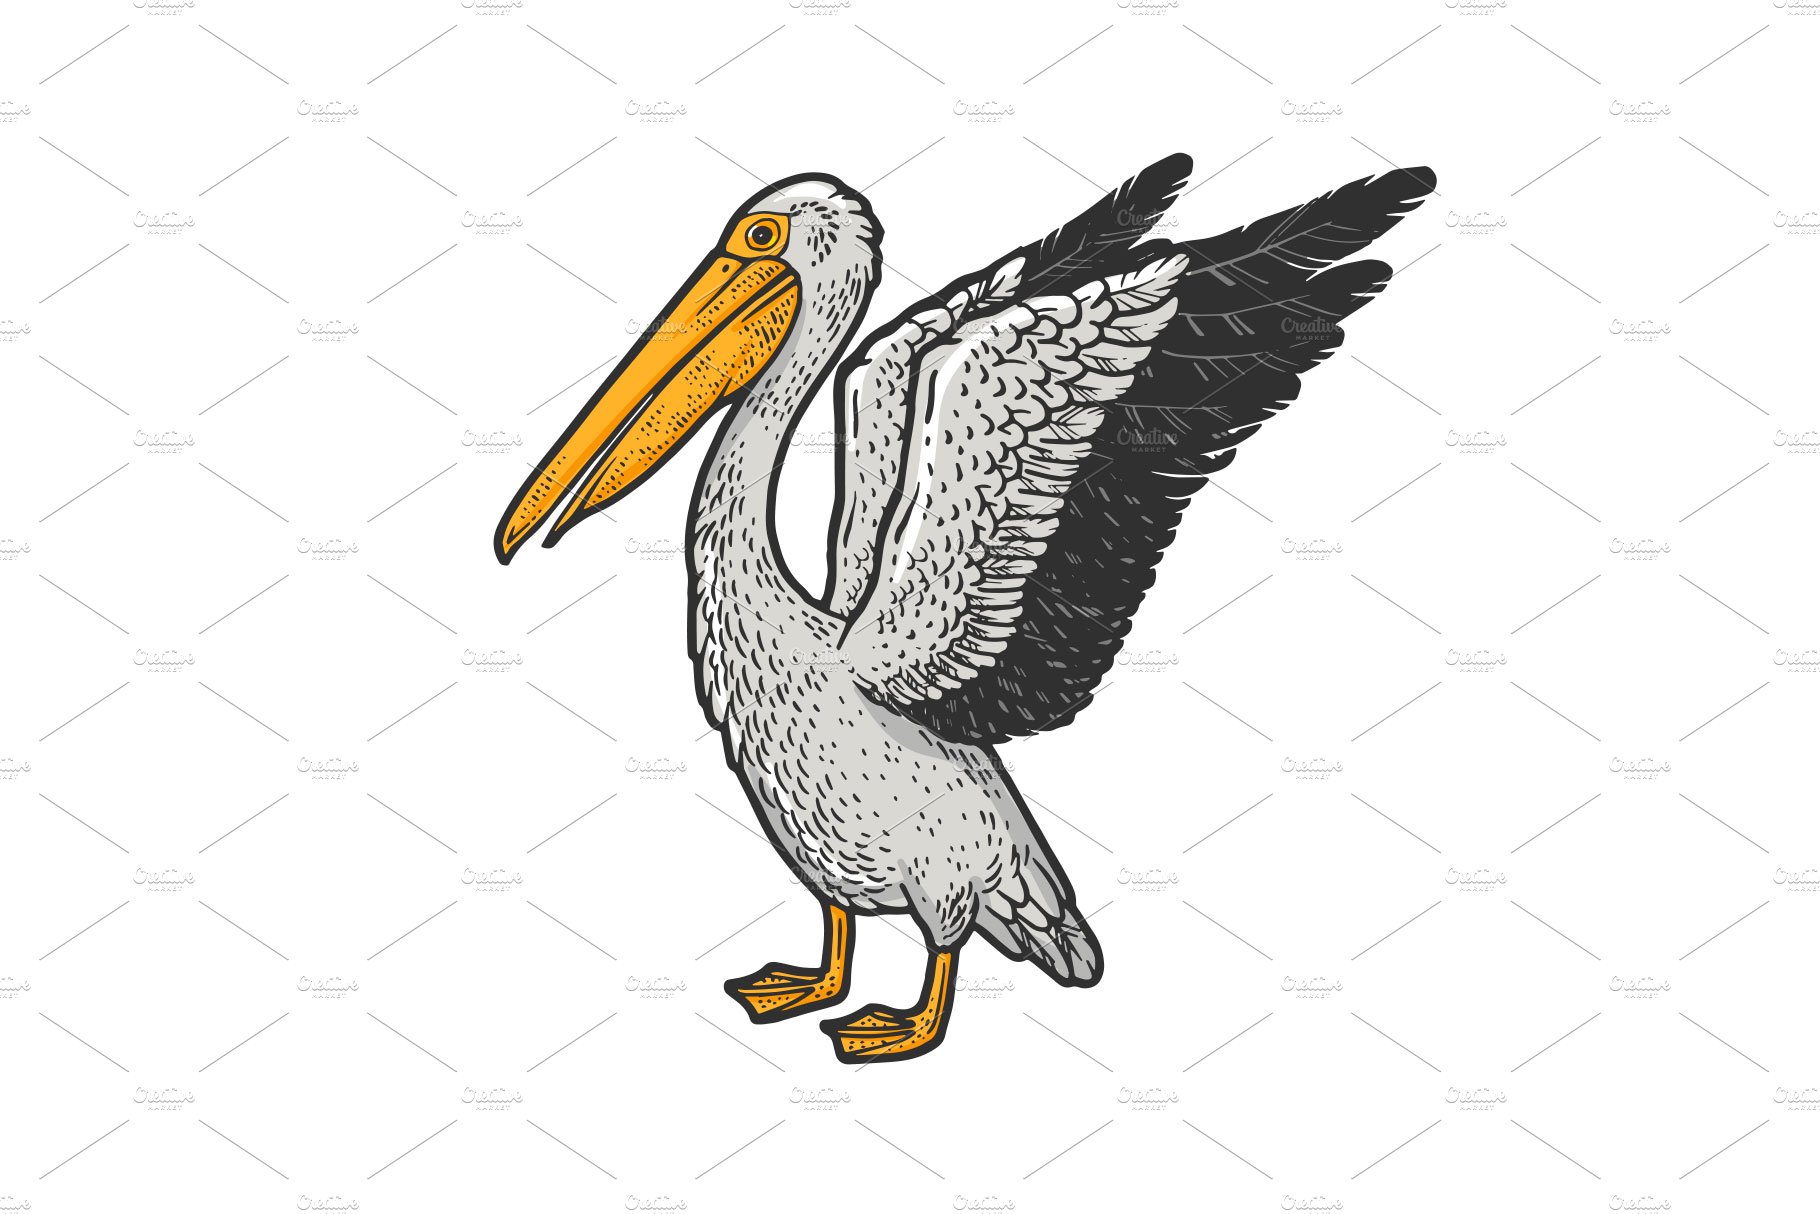 Pelican bird sketch vector cover image.